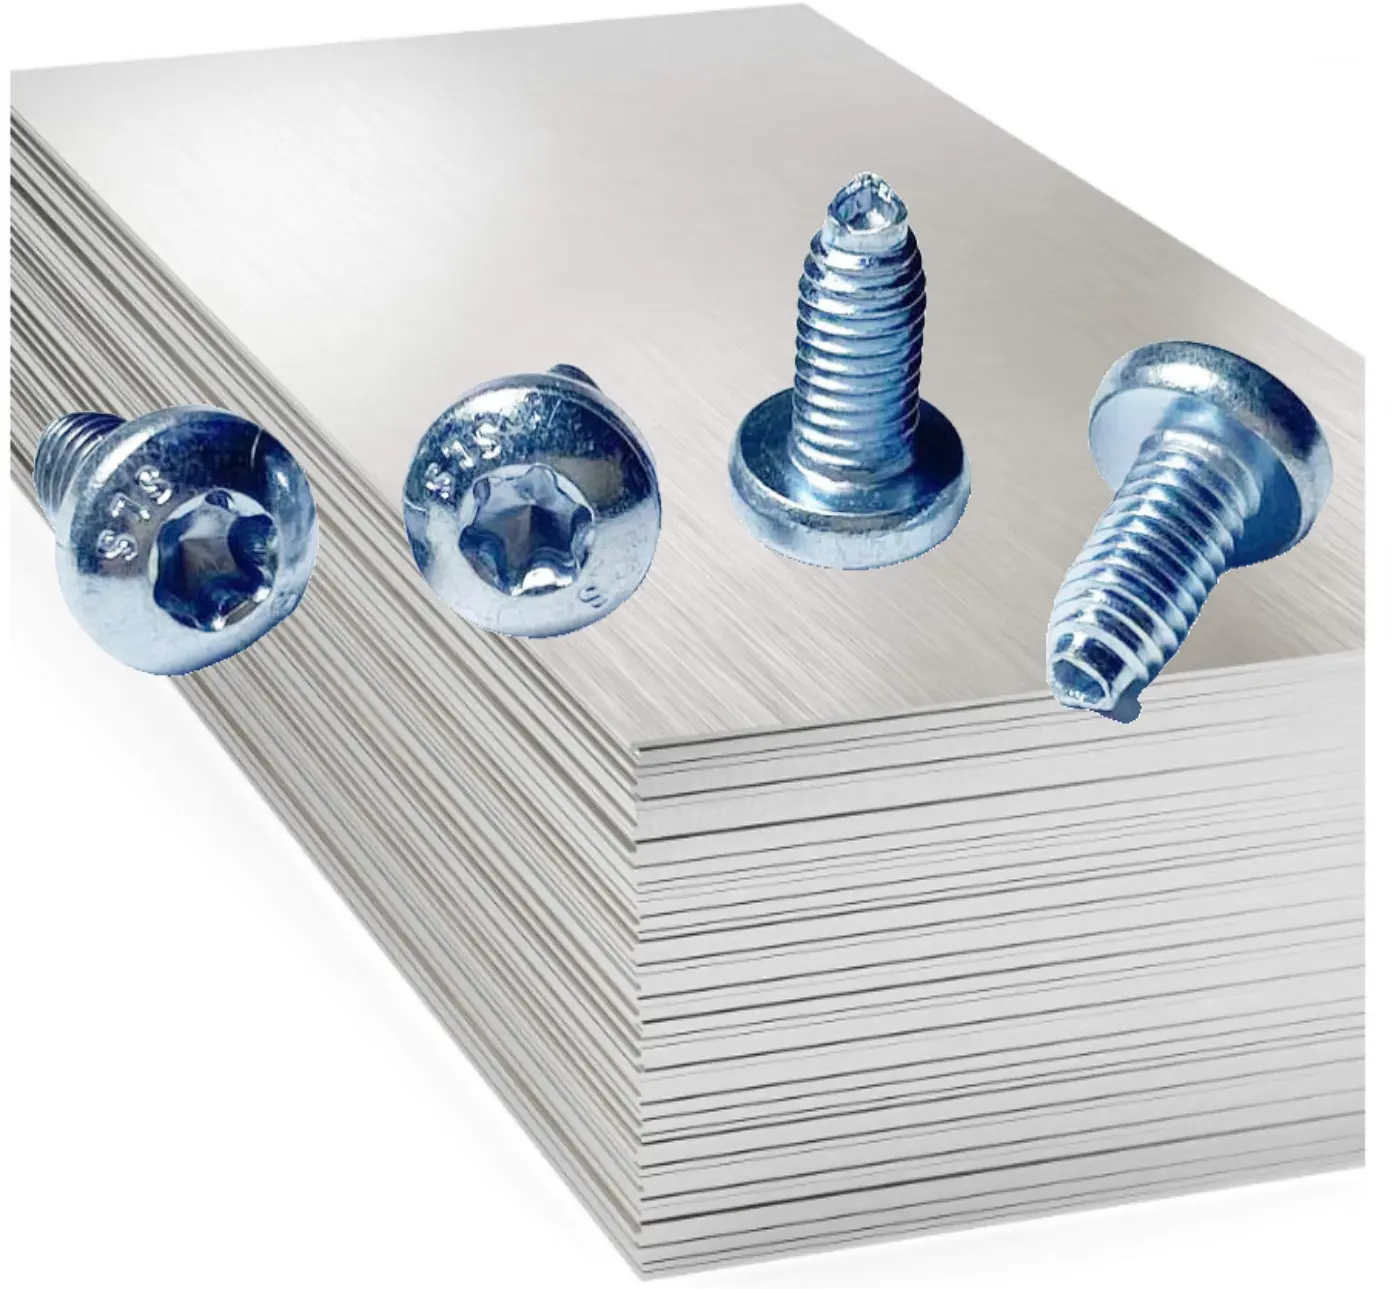 8-32 × 3/8 Pan Head Torx Thread Forming  Screws for Metal  Steel Blue Zinc Plated